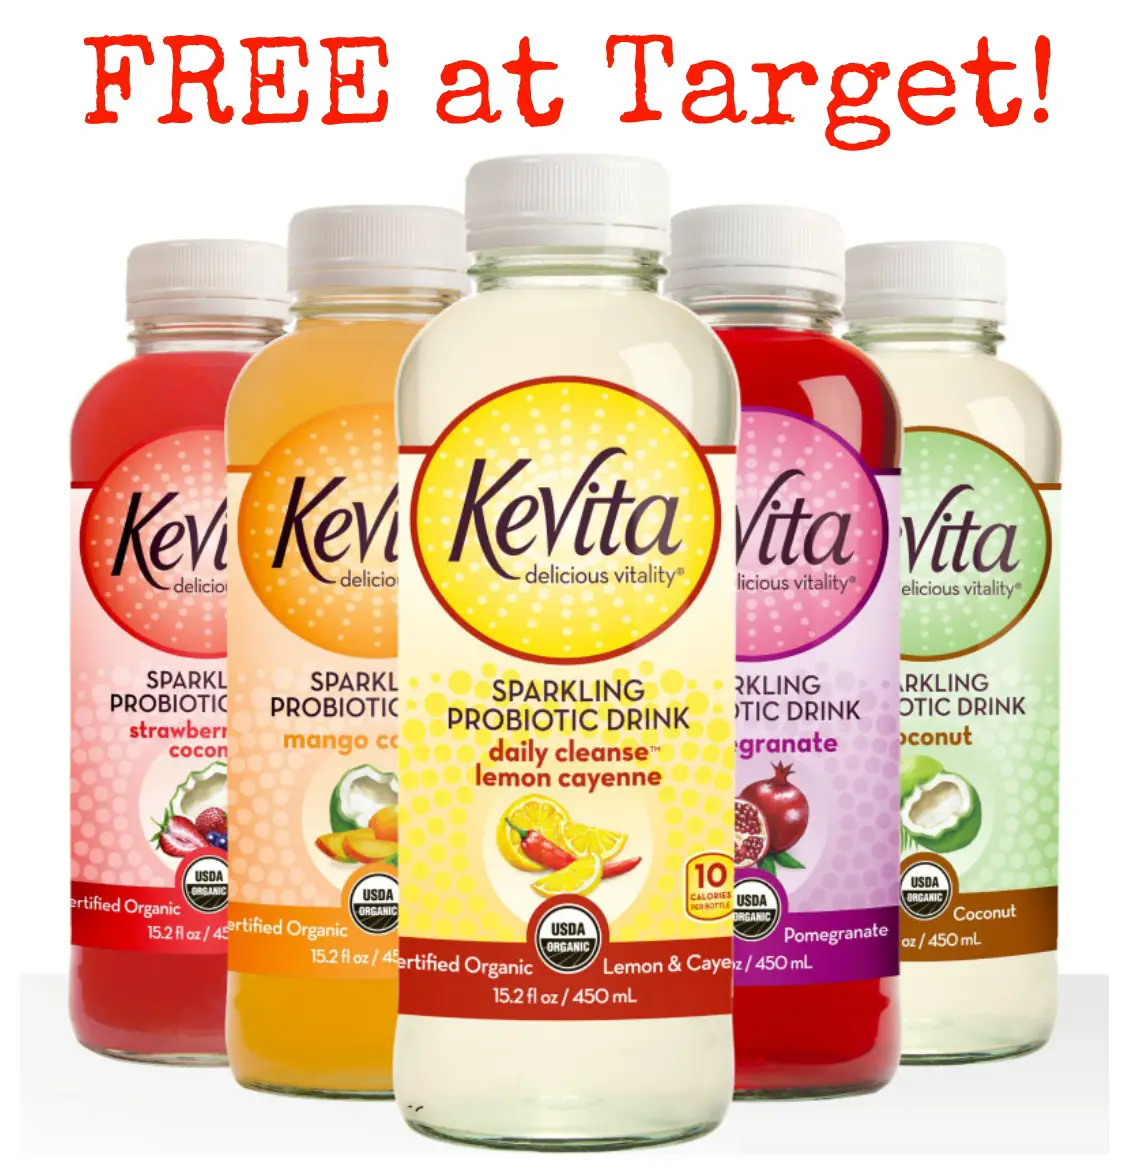 FREE KeVita Probiotic Drink at Target!